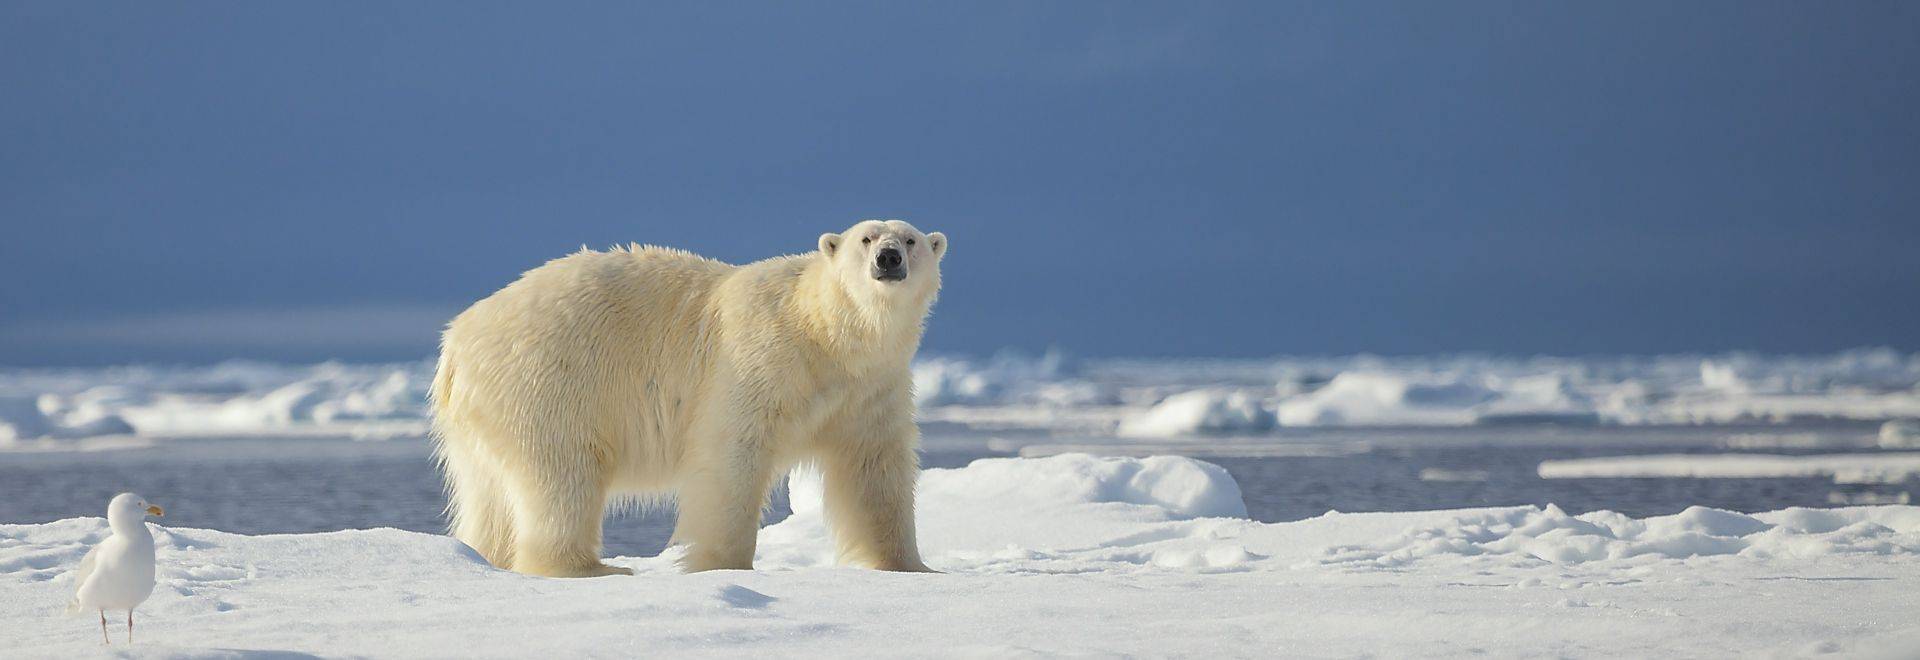 Polar Bear Shutterstock 568713703 in-viewport